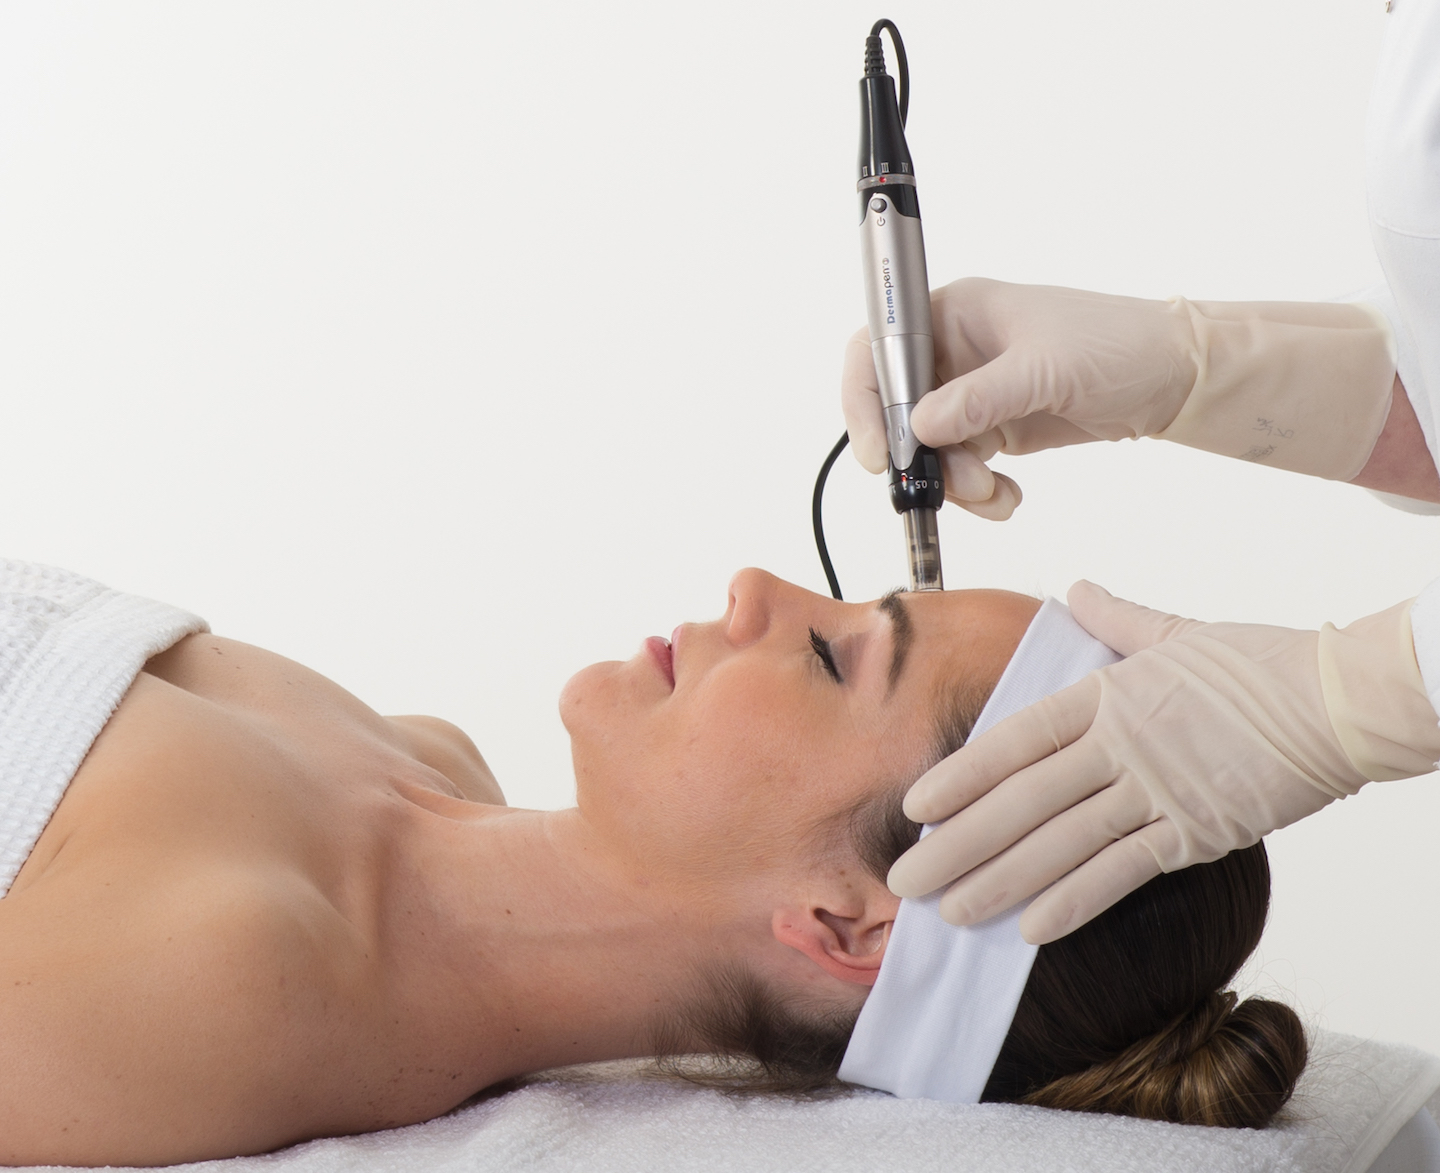 Woman patient receiving Dermapen micro needling treatment for facial aesthetics